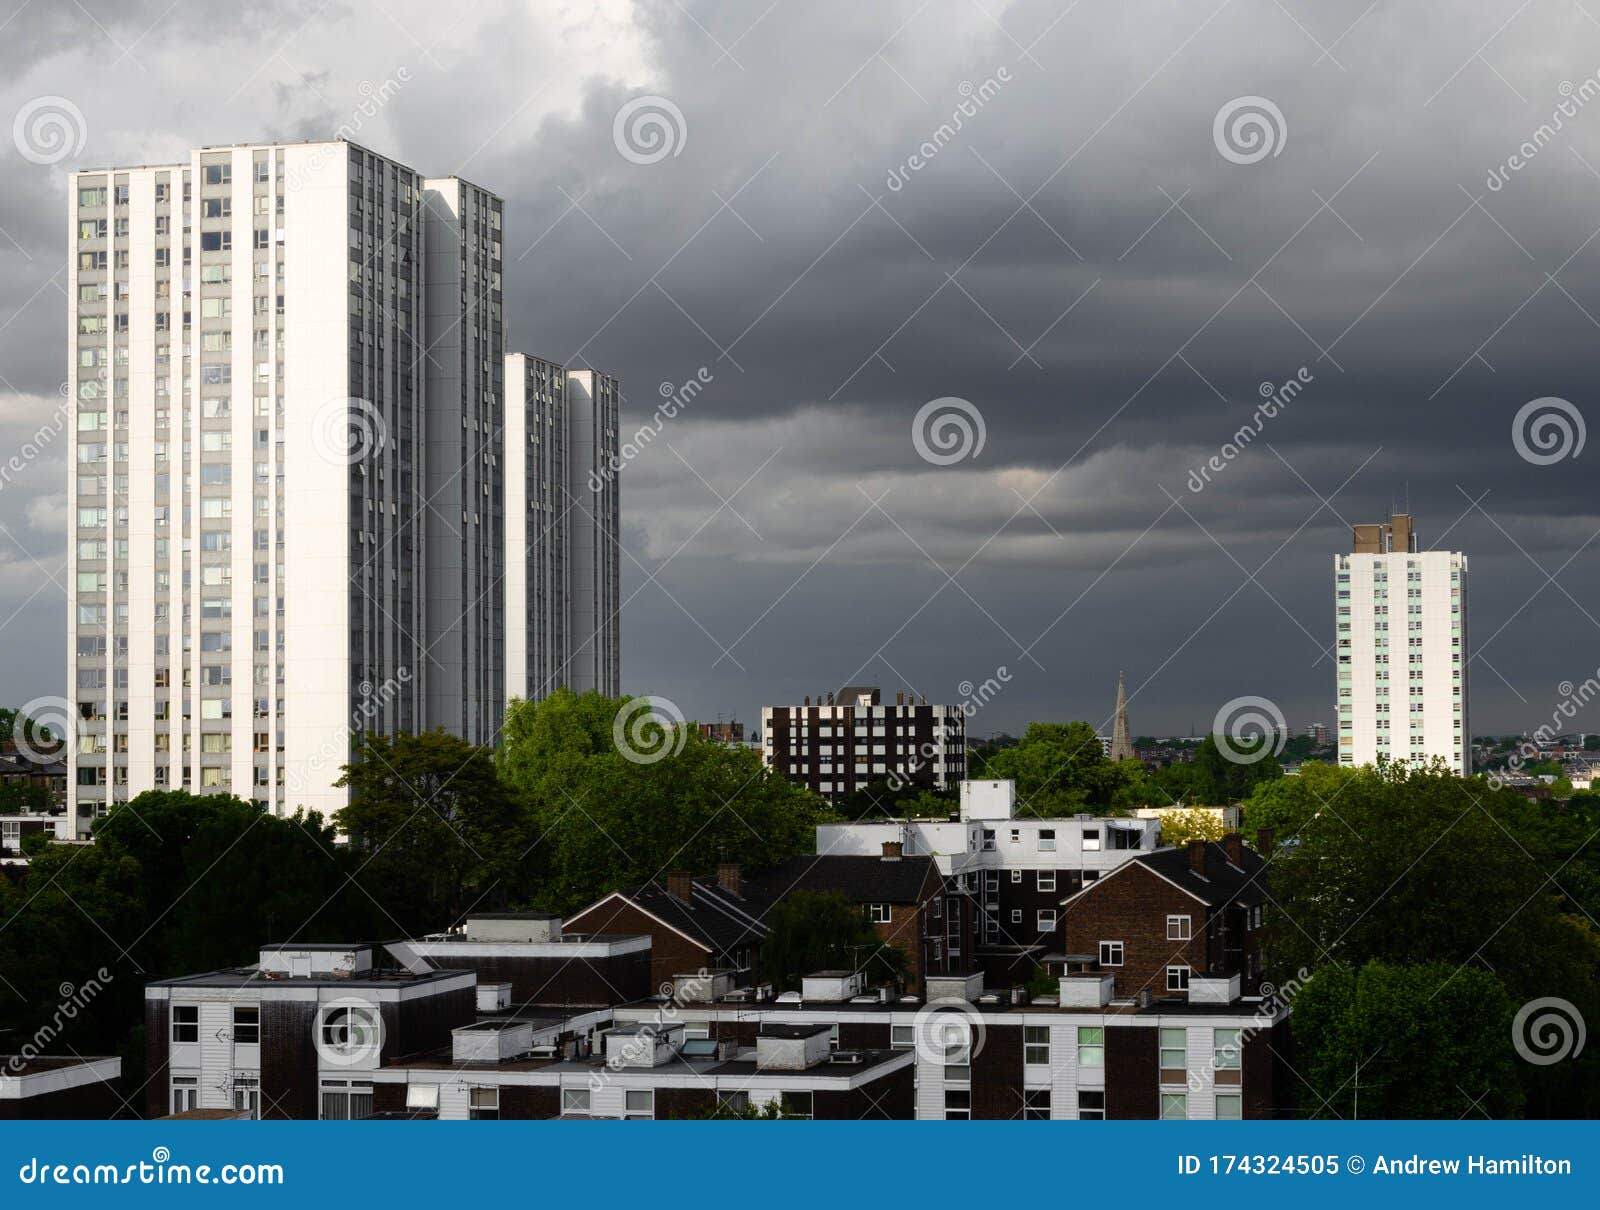 High Rise Social Housing Flats North London England Uk Stock Image